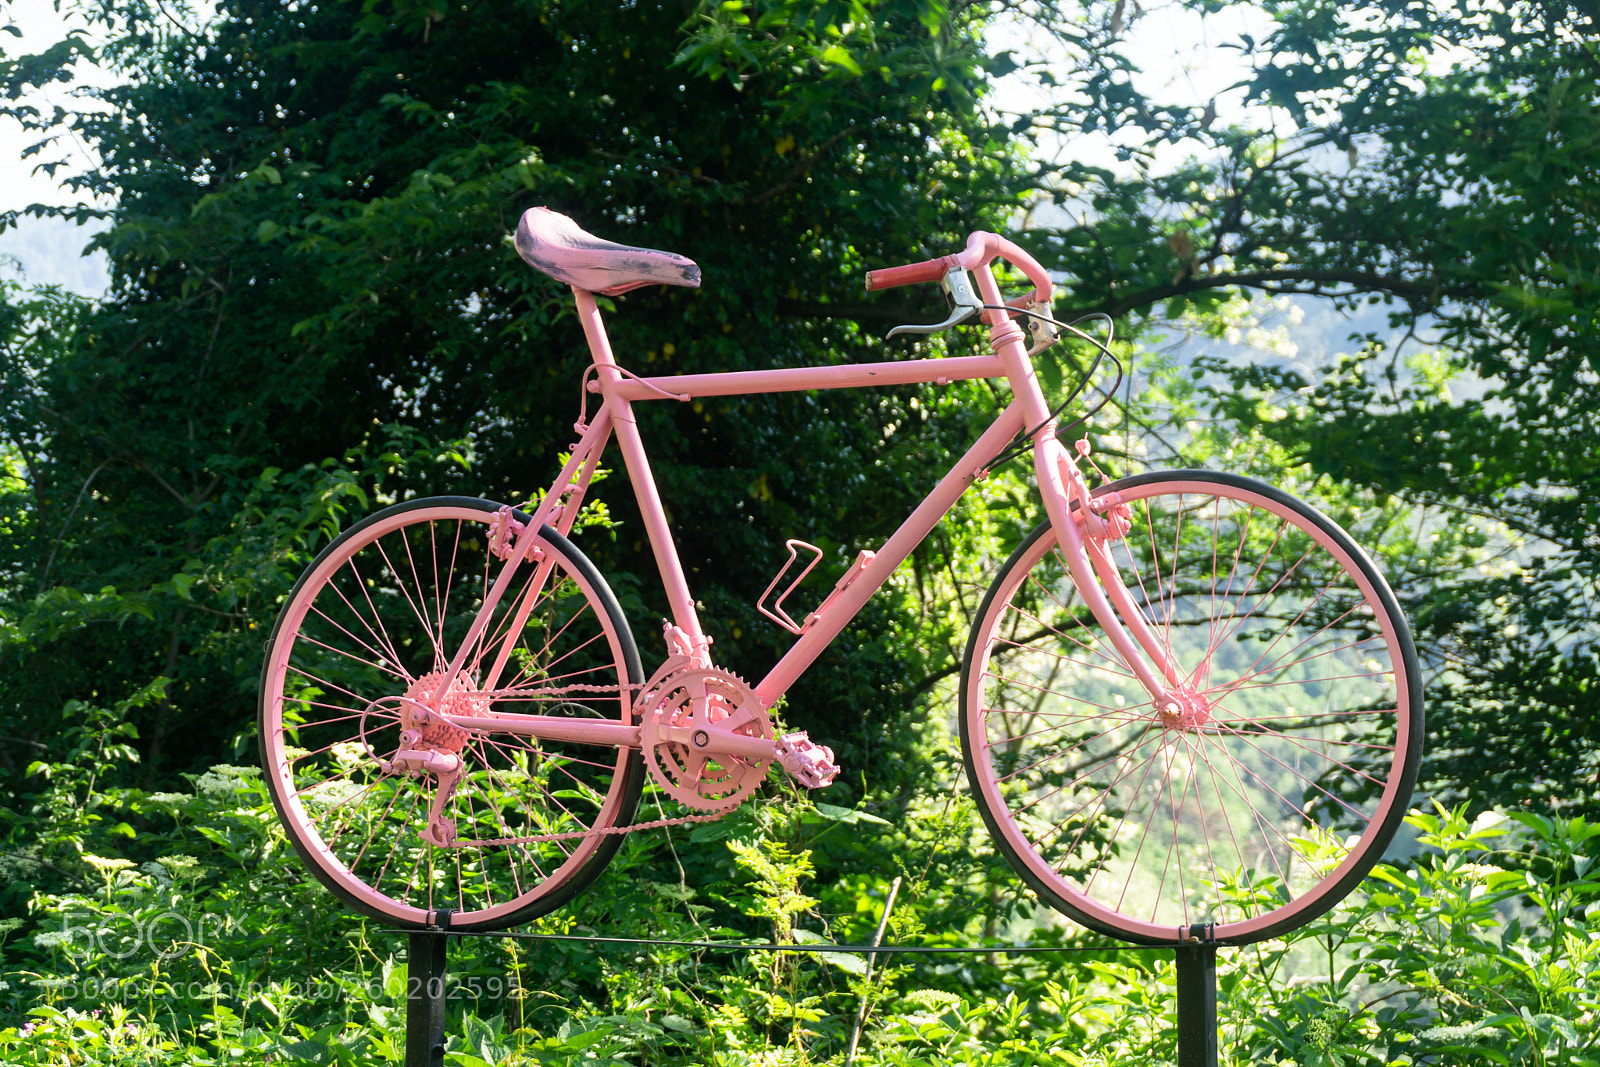 Sony a6000 sample photo. A pink bike, symbol photography